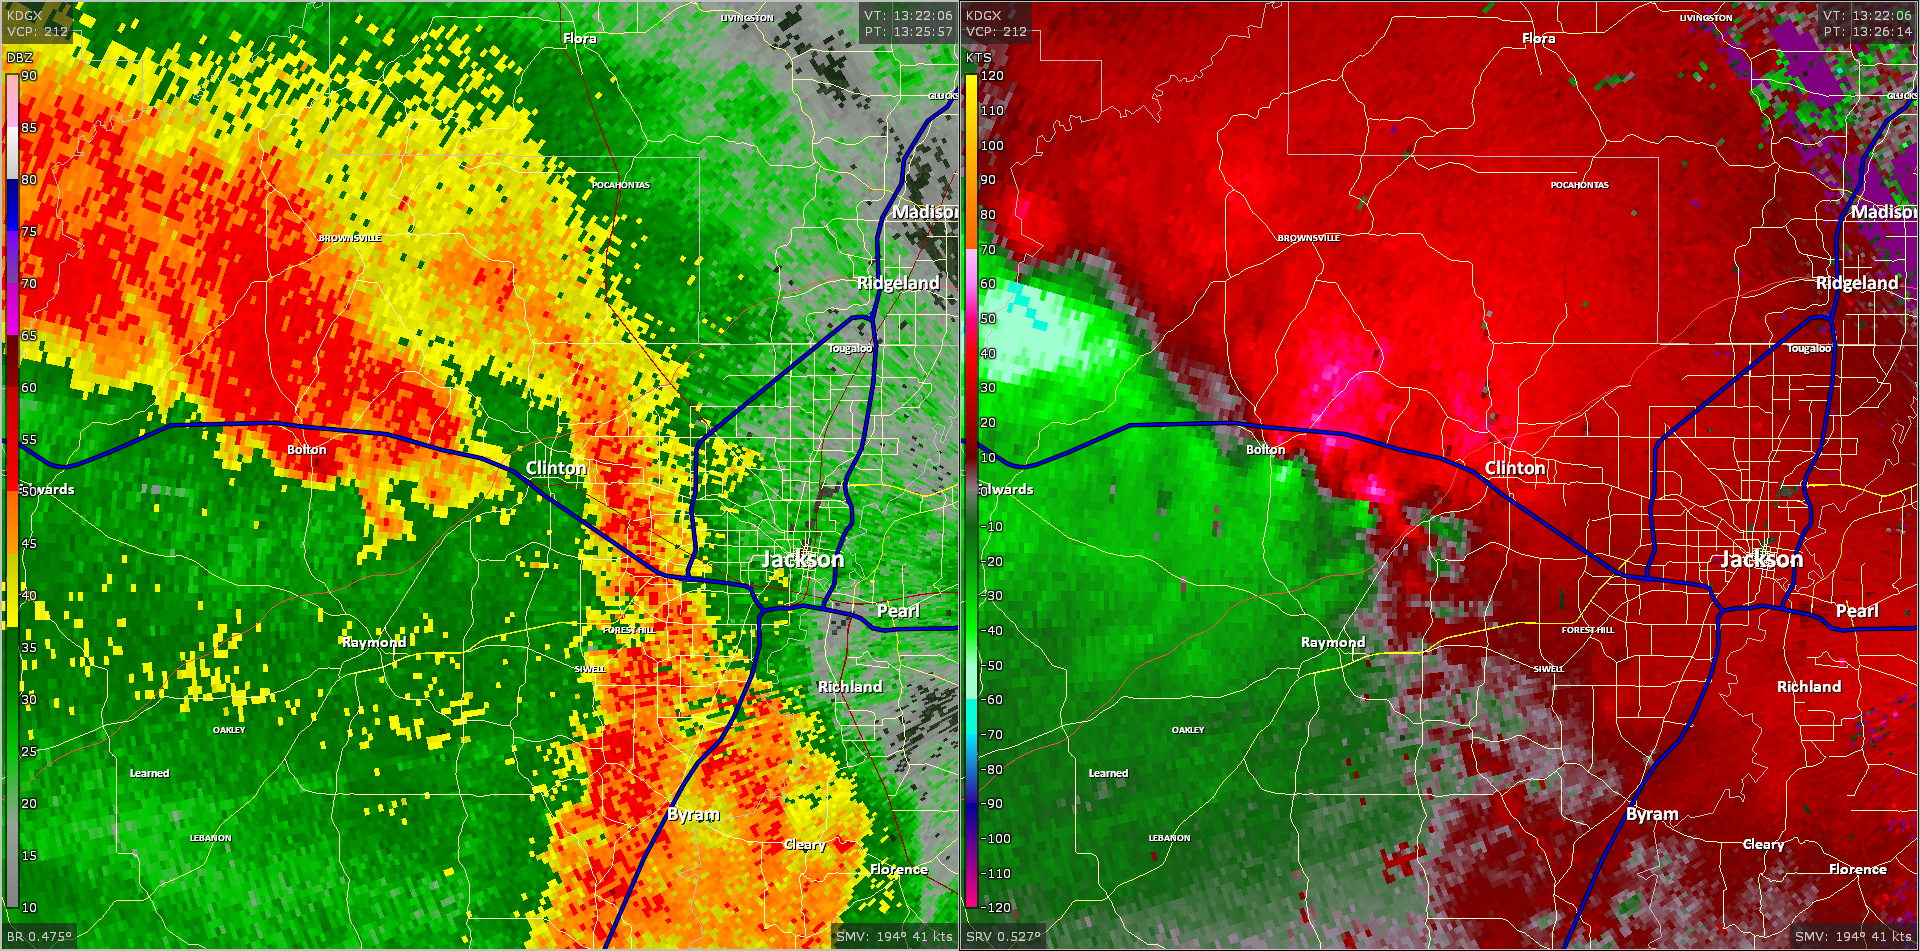 Radar - West Clinton Tornado